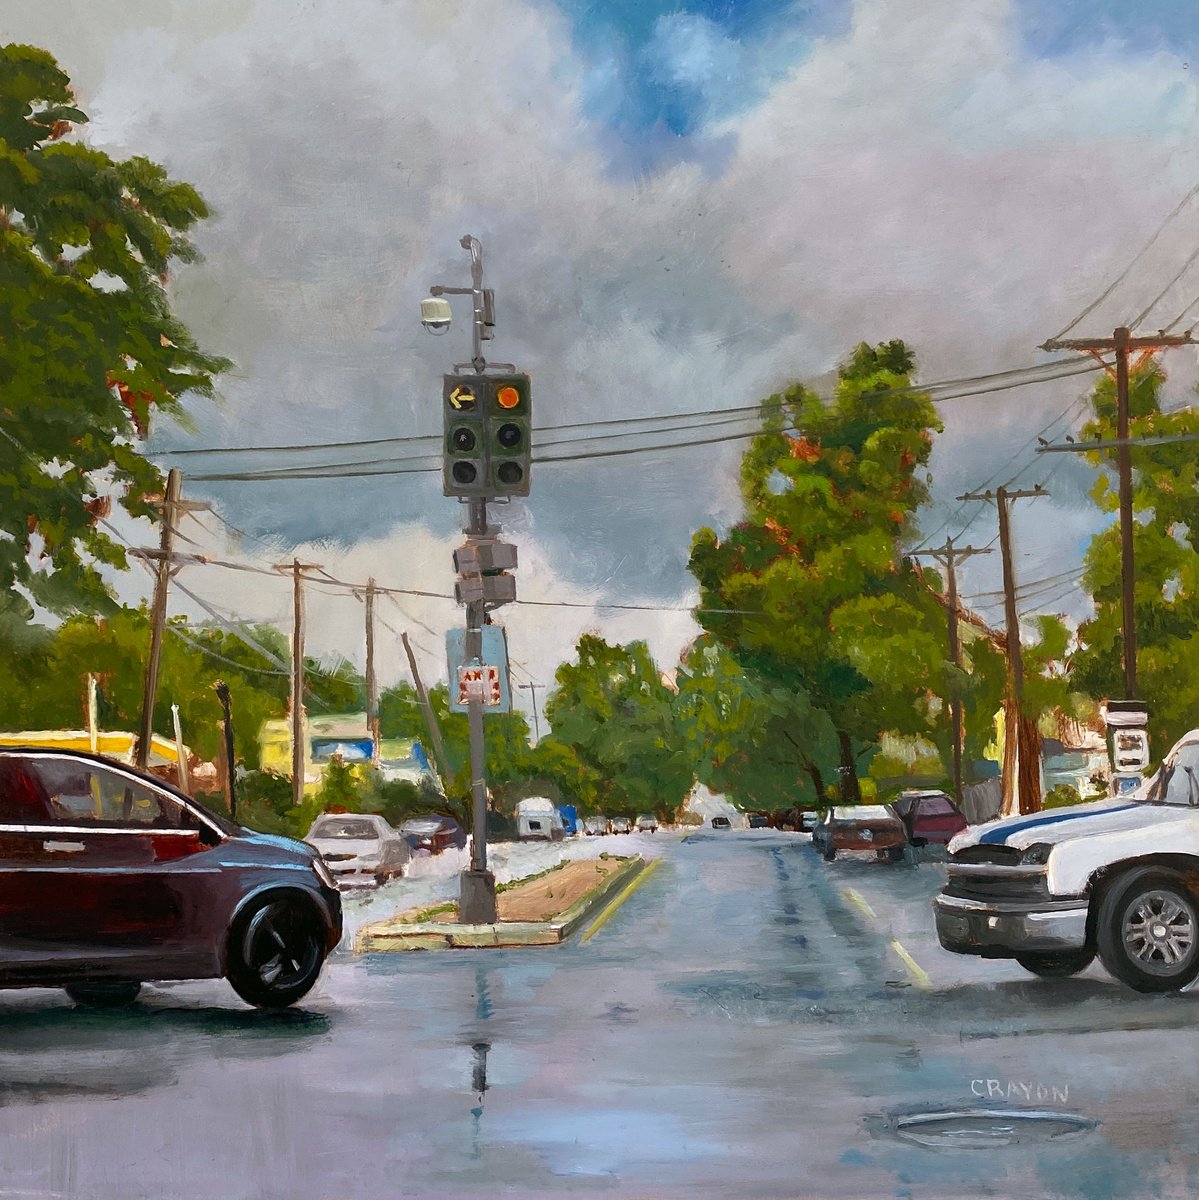 Old Neighborhood by Dennis Crayon